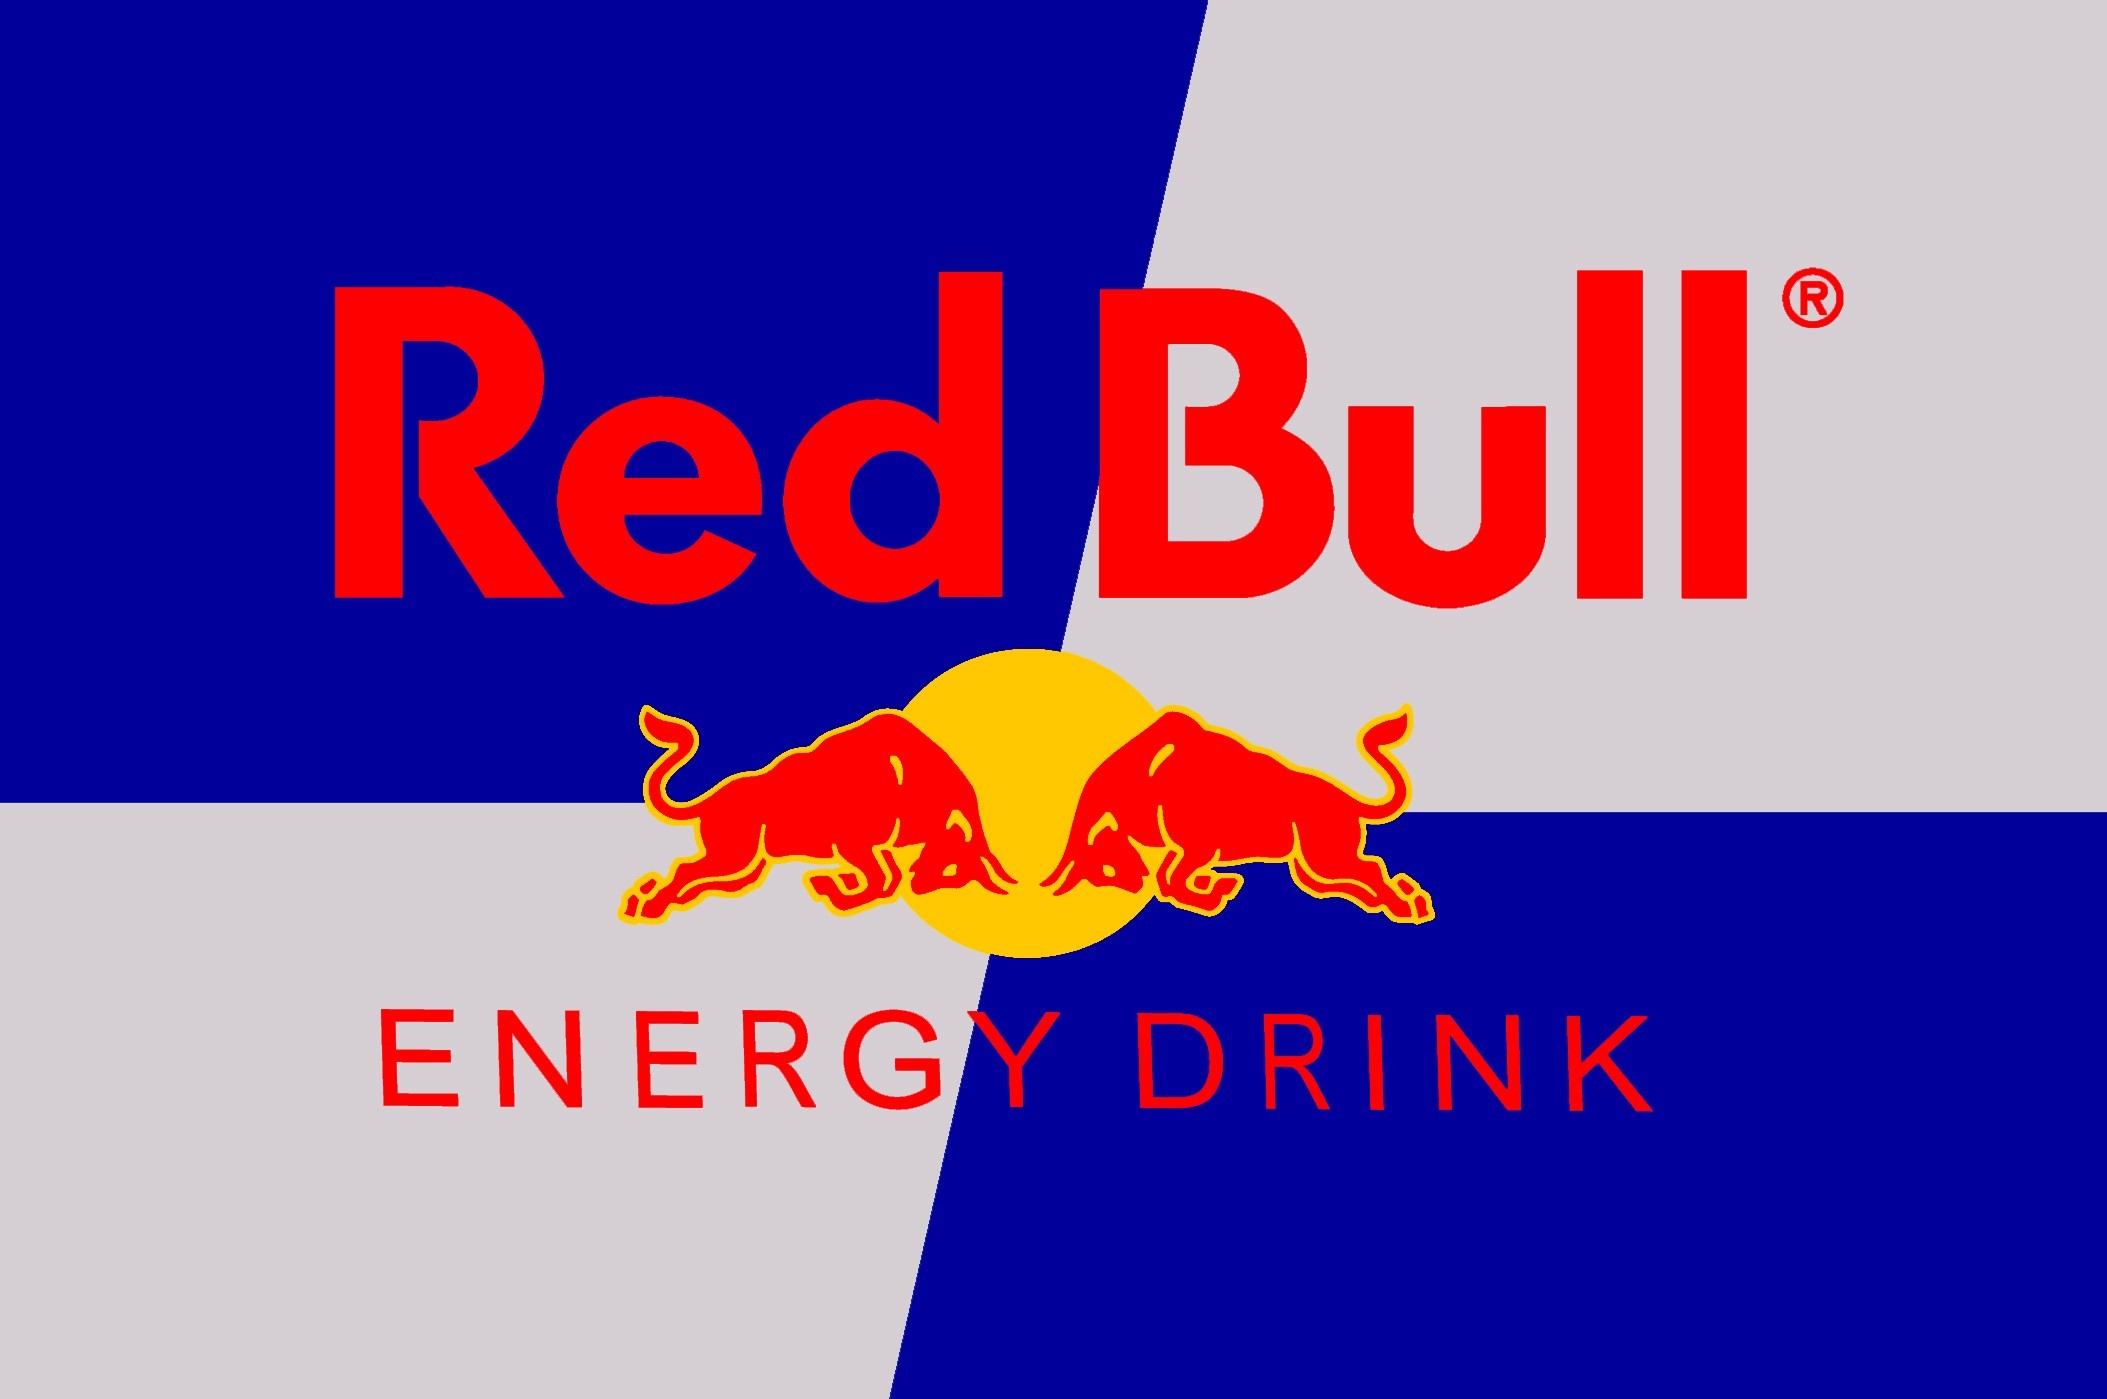 Trabalhe Conosco Red Bull 2018